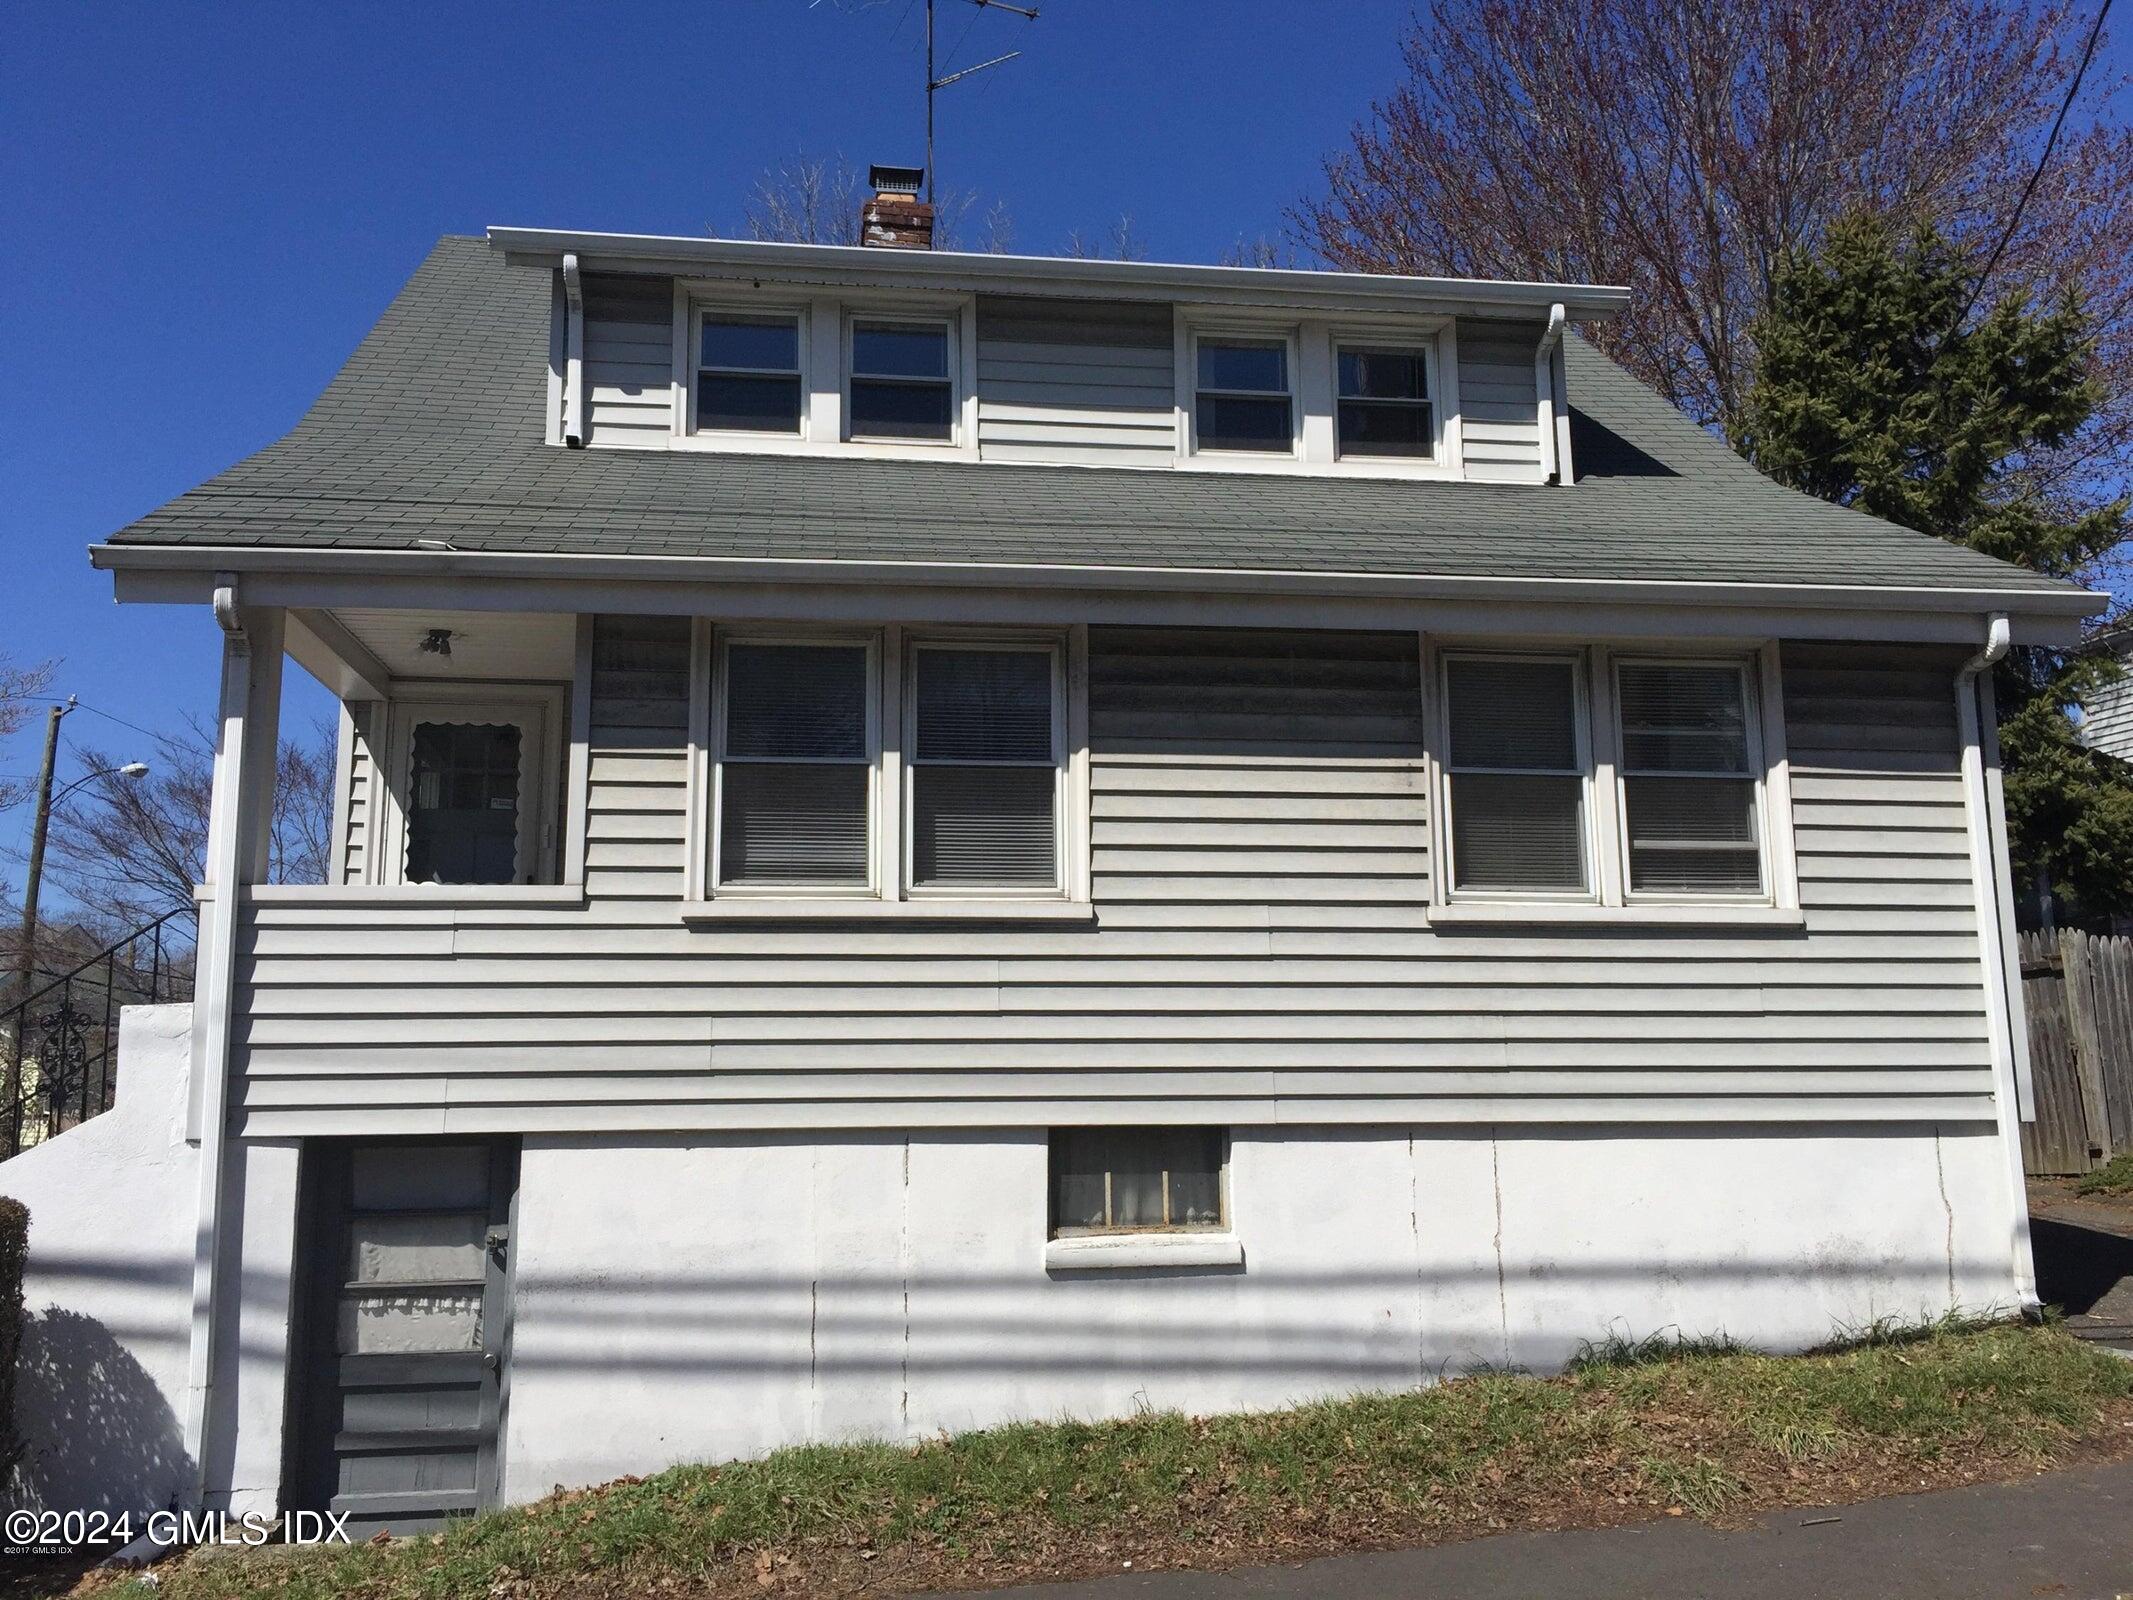 Rental Property at 36 Valley Road, Cos Cob, Connecticut - Bedrooms: 2 
Bathrooms: 1  - $2,650 MO.